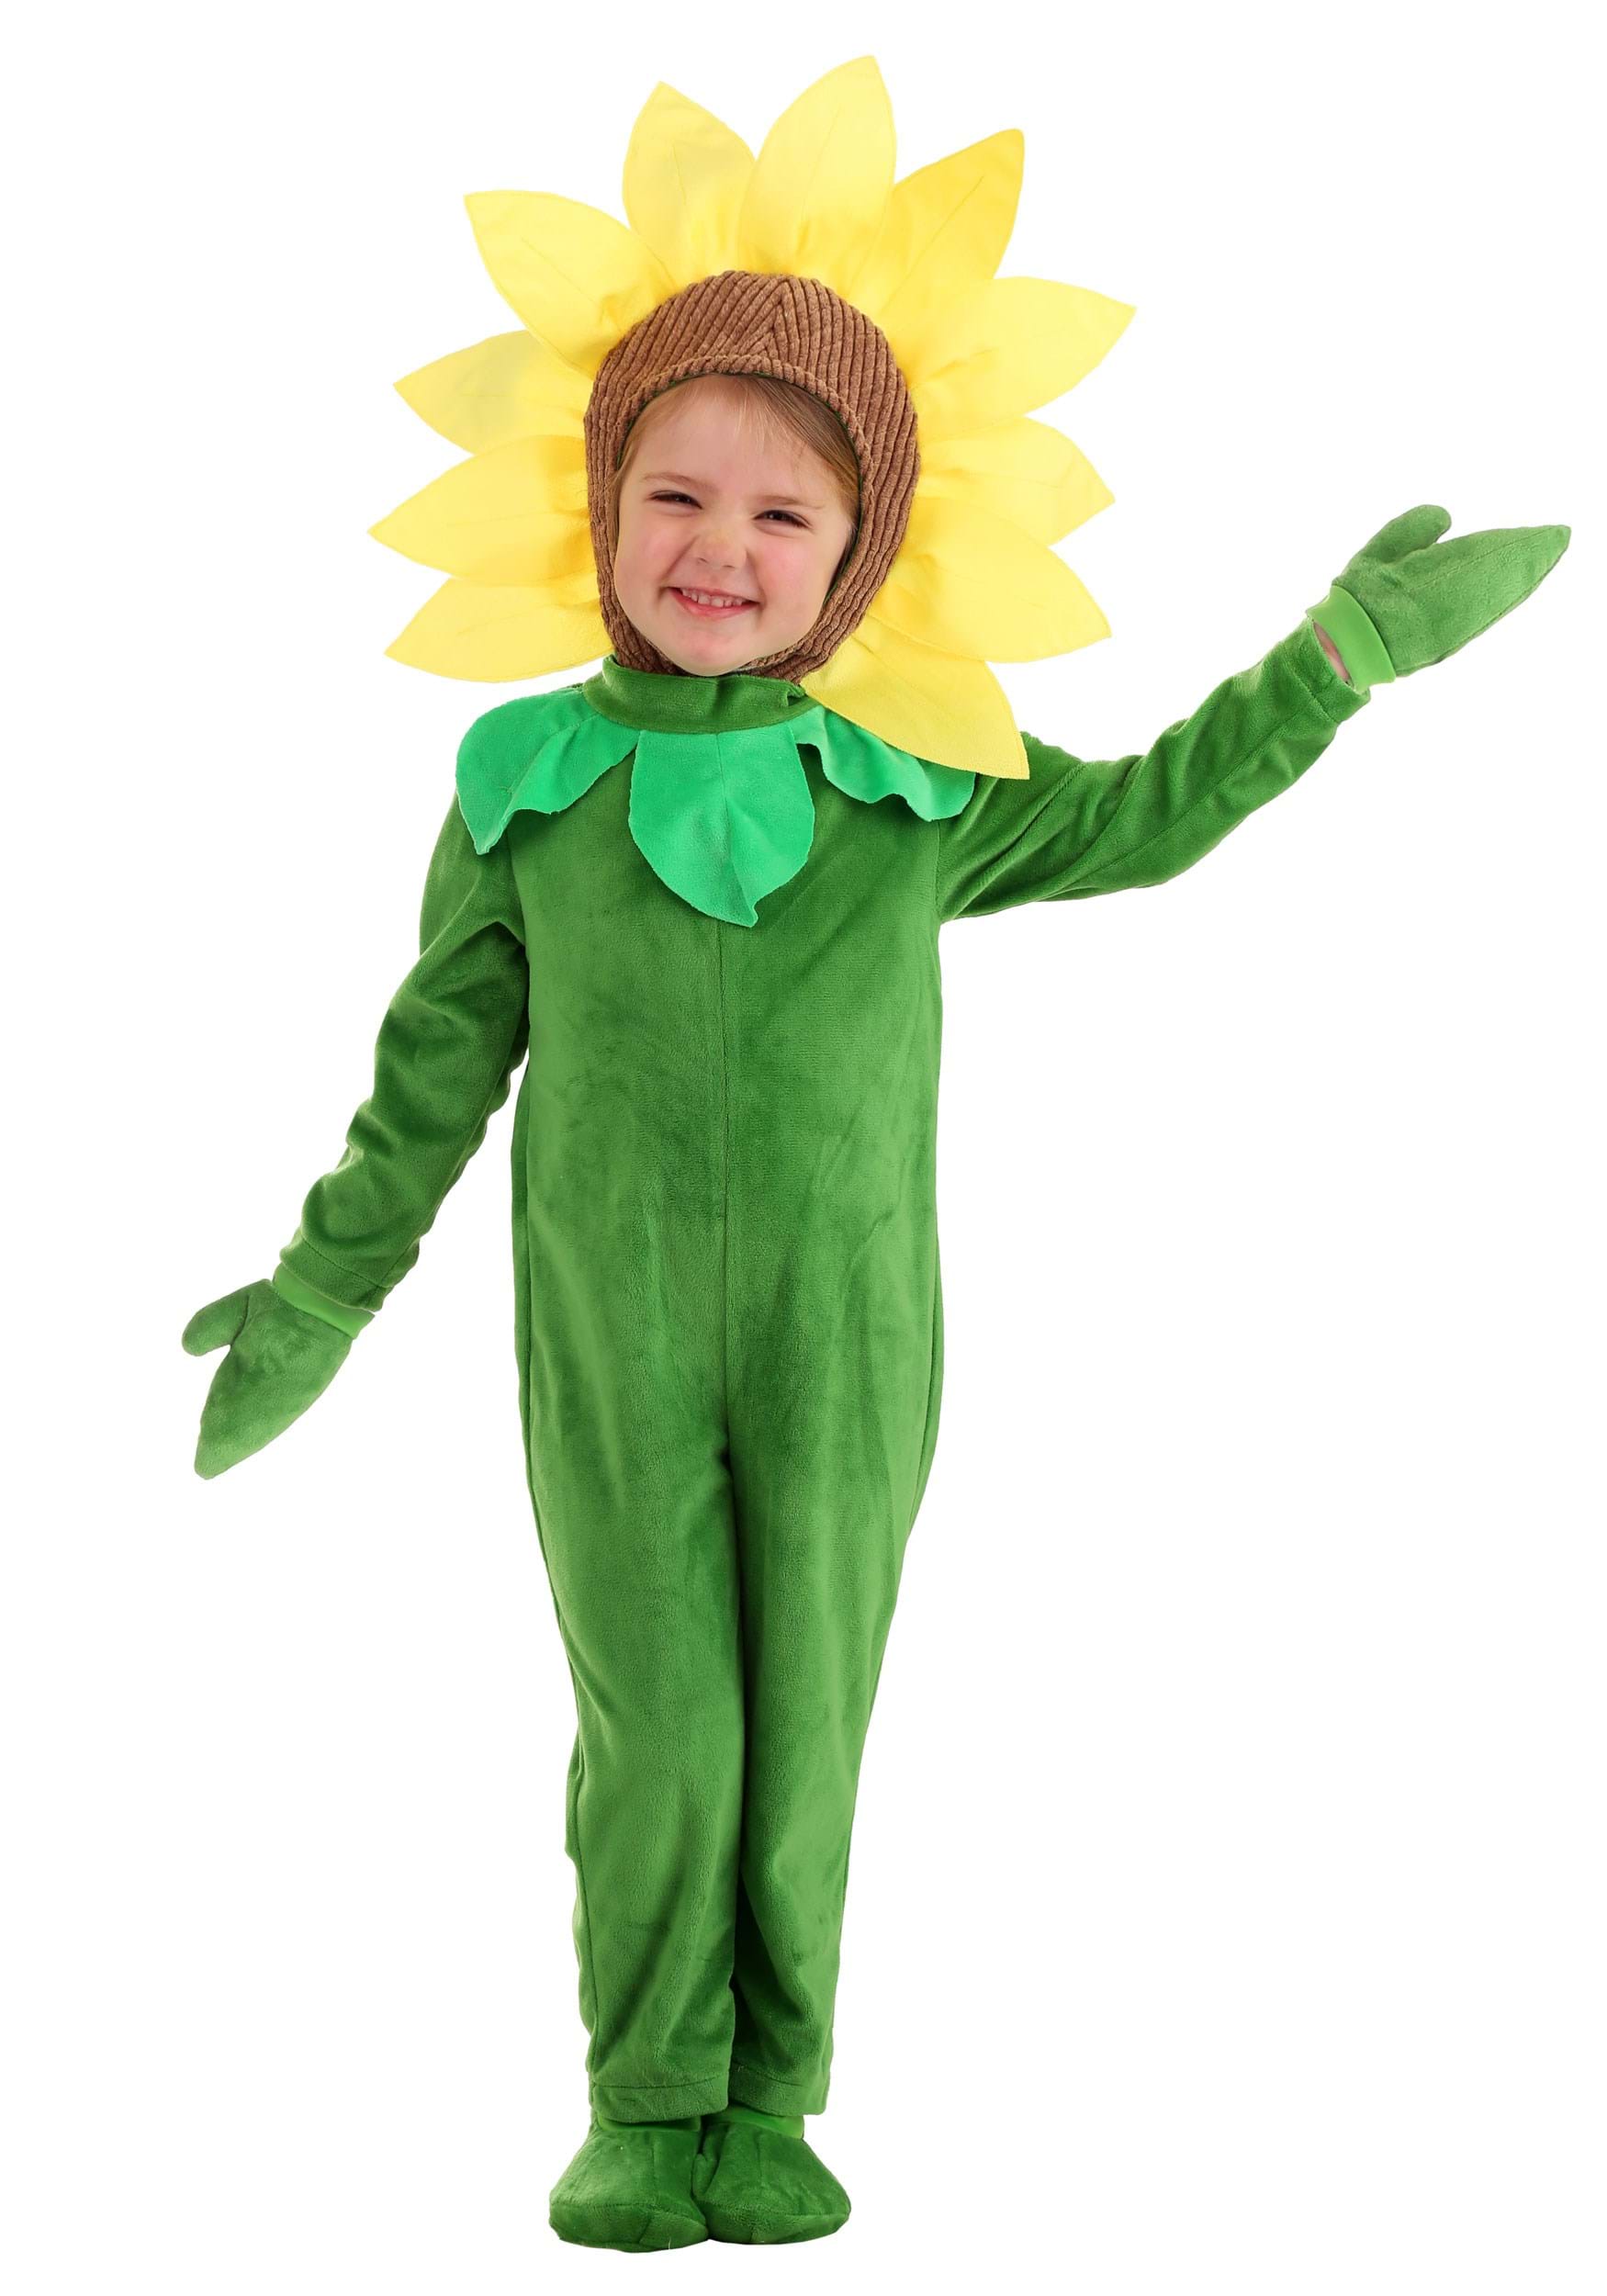 Photos - Fancy Dress FUN Costumes Flower Toddler Costume Green/Yellow FUN0911TD